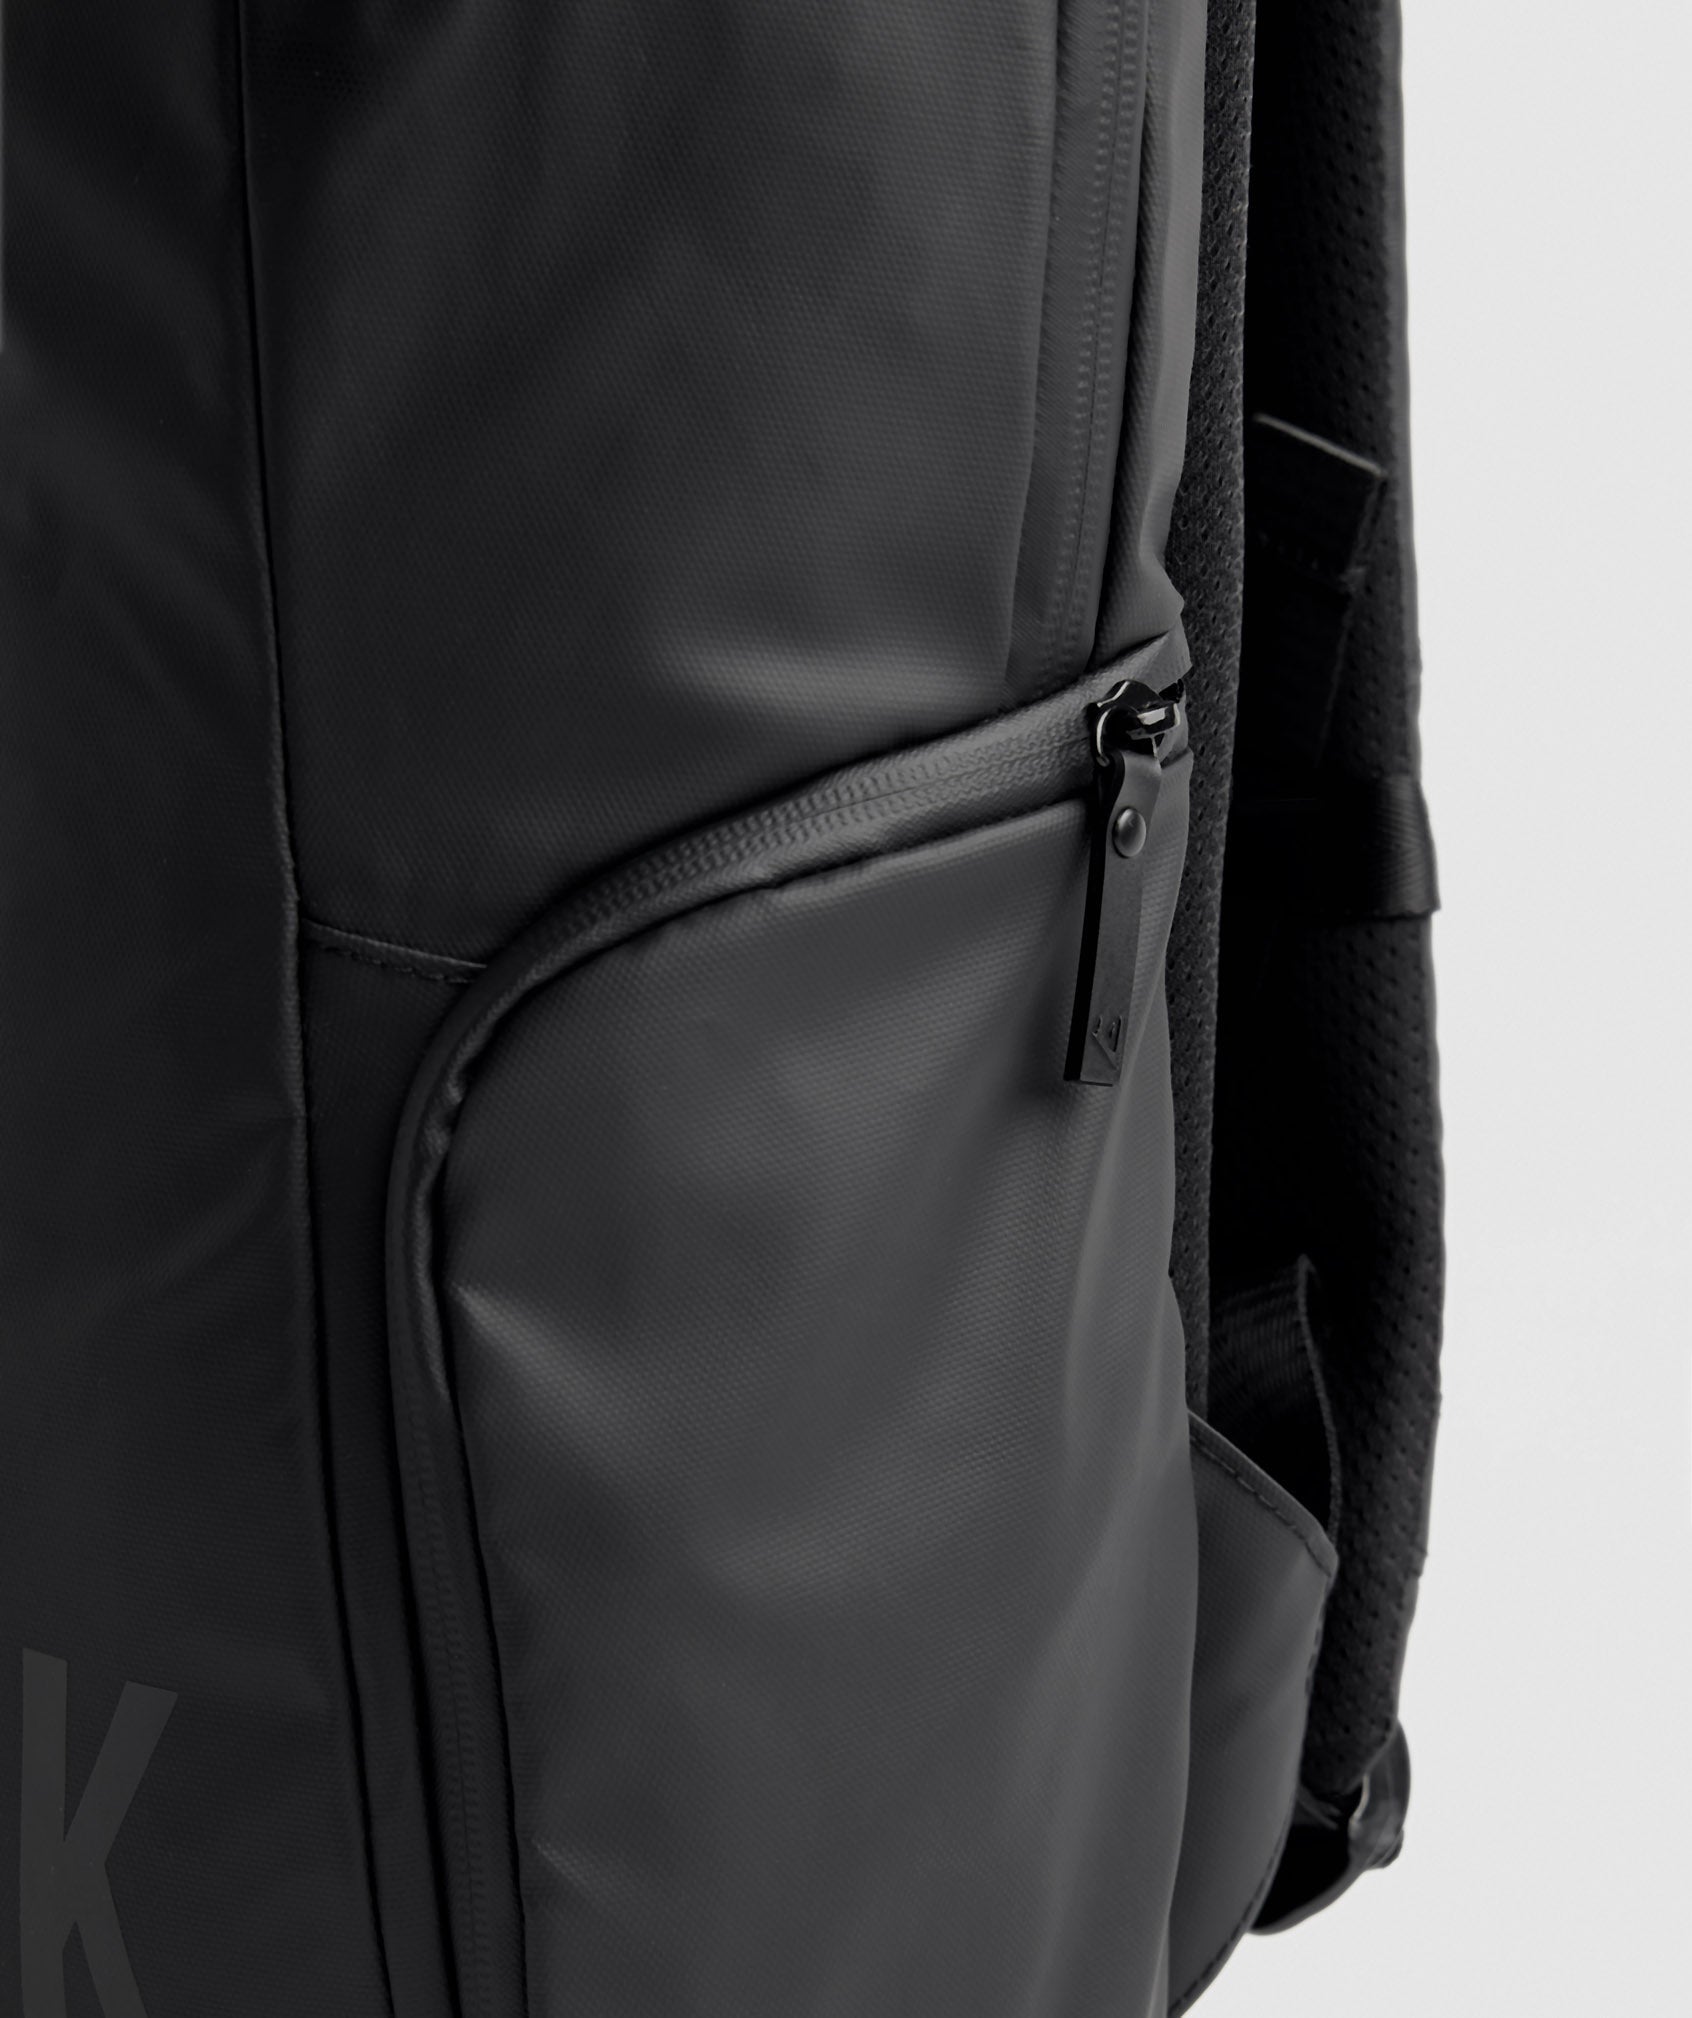 X-Series Bag 0.1 in Black - view 8